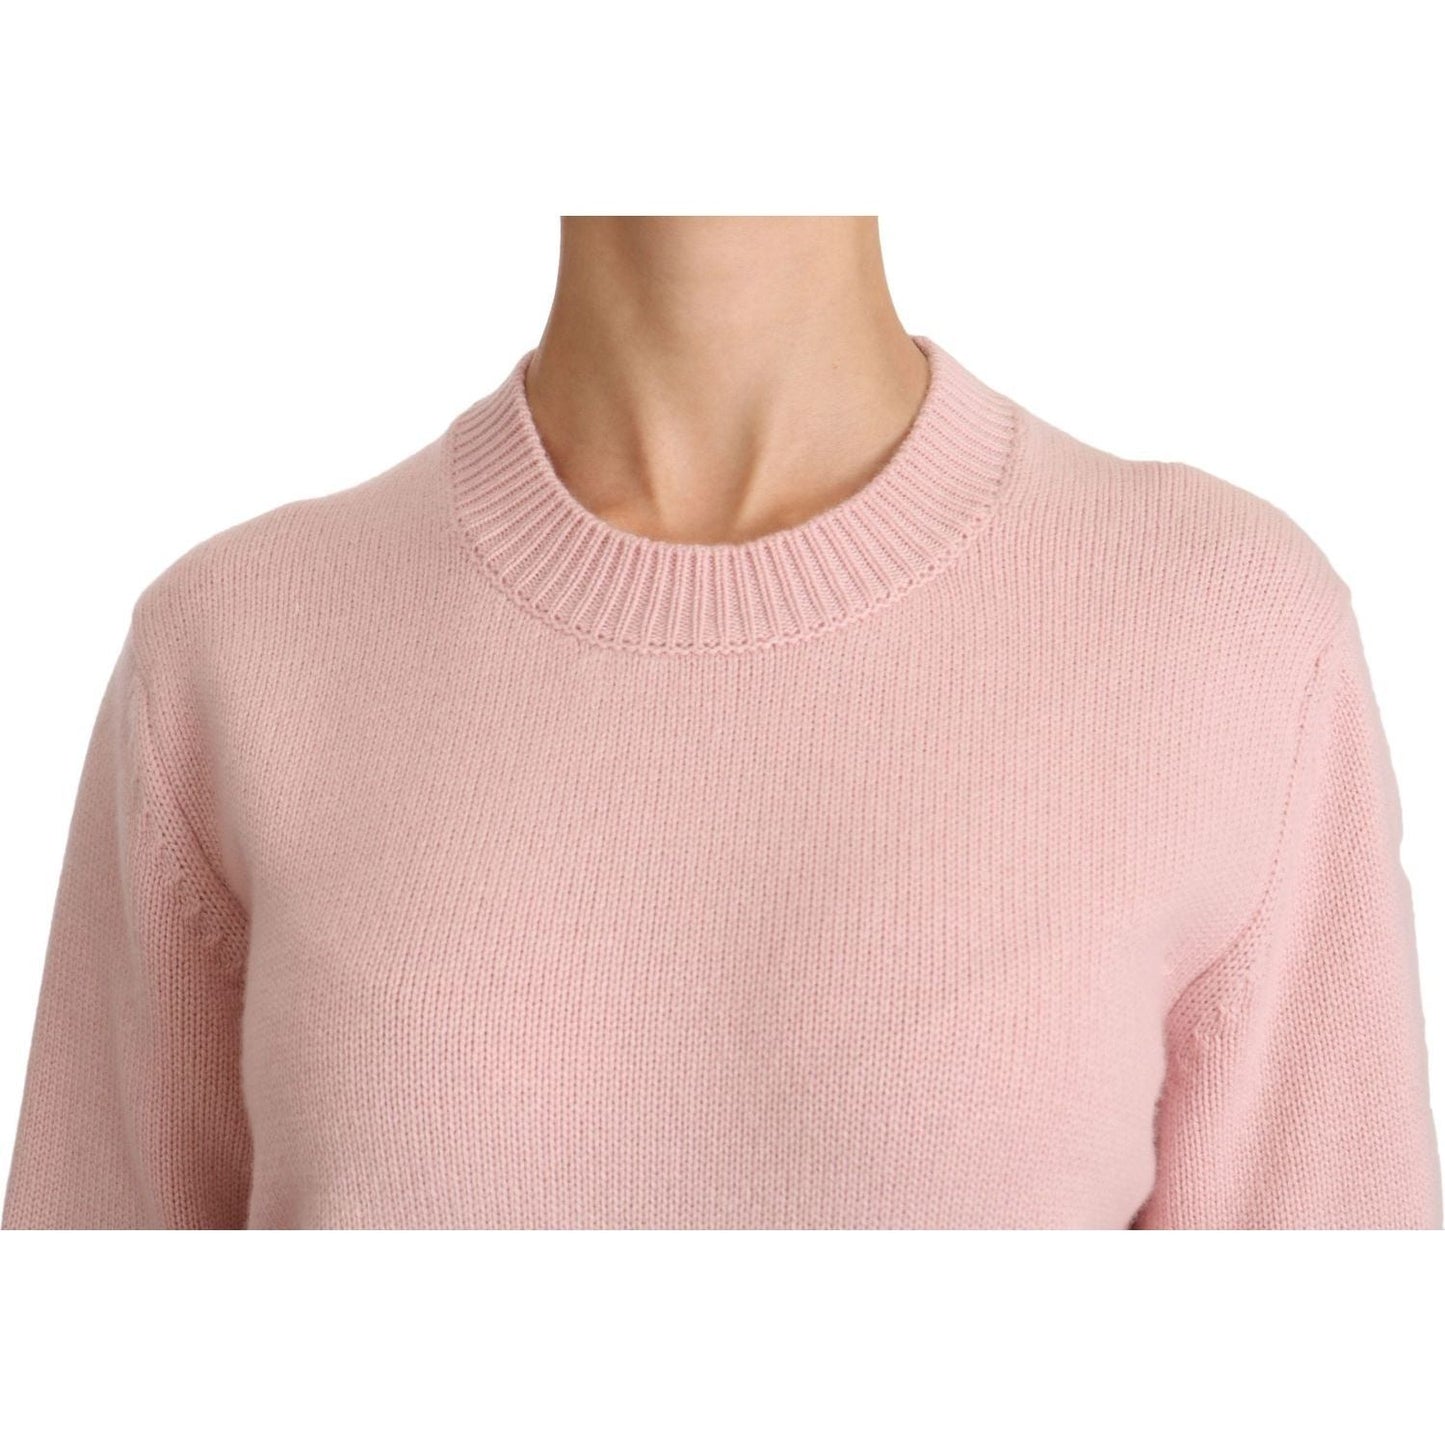 Dolce & Gabbana Cashmere-Blend Pink Crew Neck Sweater pink-crew-neck-cashmere-pullover-sweater IMG_2753-scaled-b6c039ac-b46.jpg